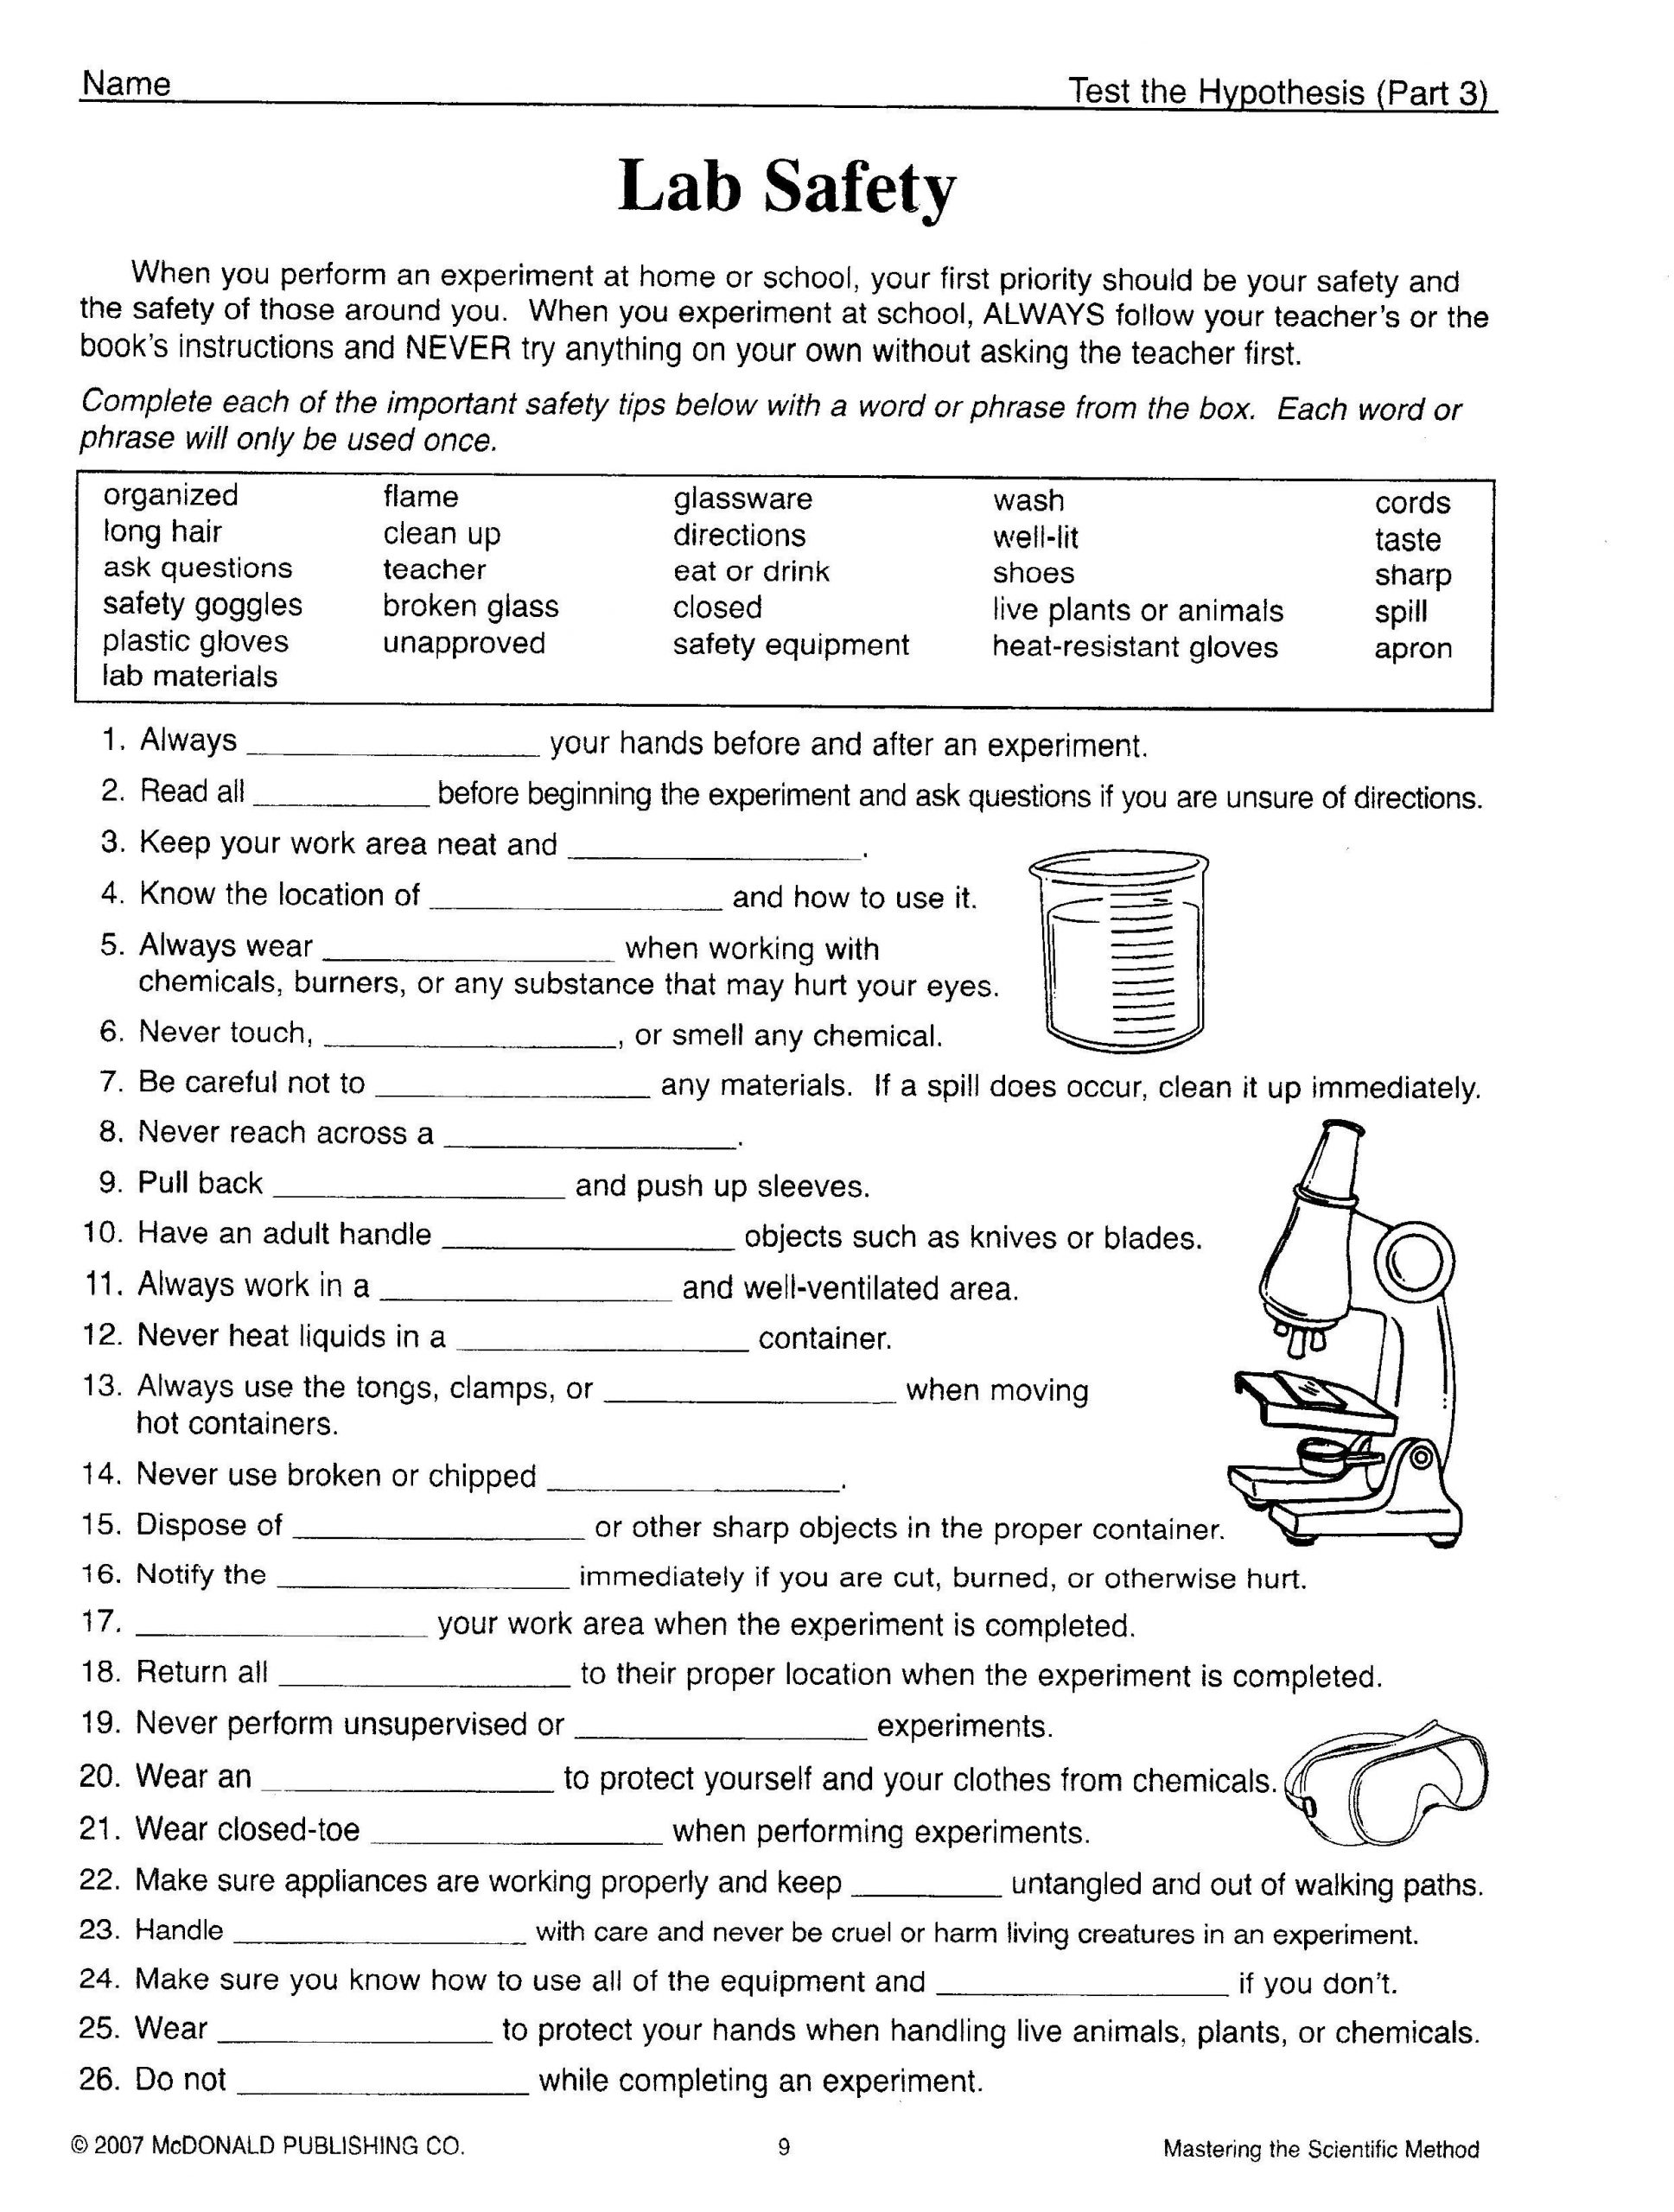 Lab Safety Symbols Worksheet 7th Grade Science Worksheets Lab Safety 7th Grade